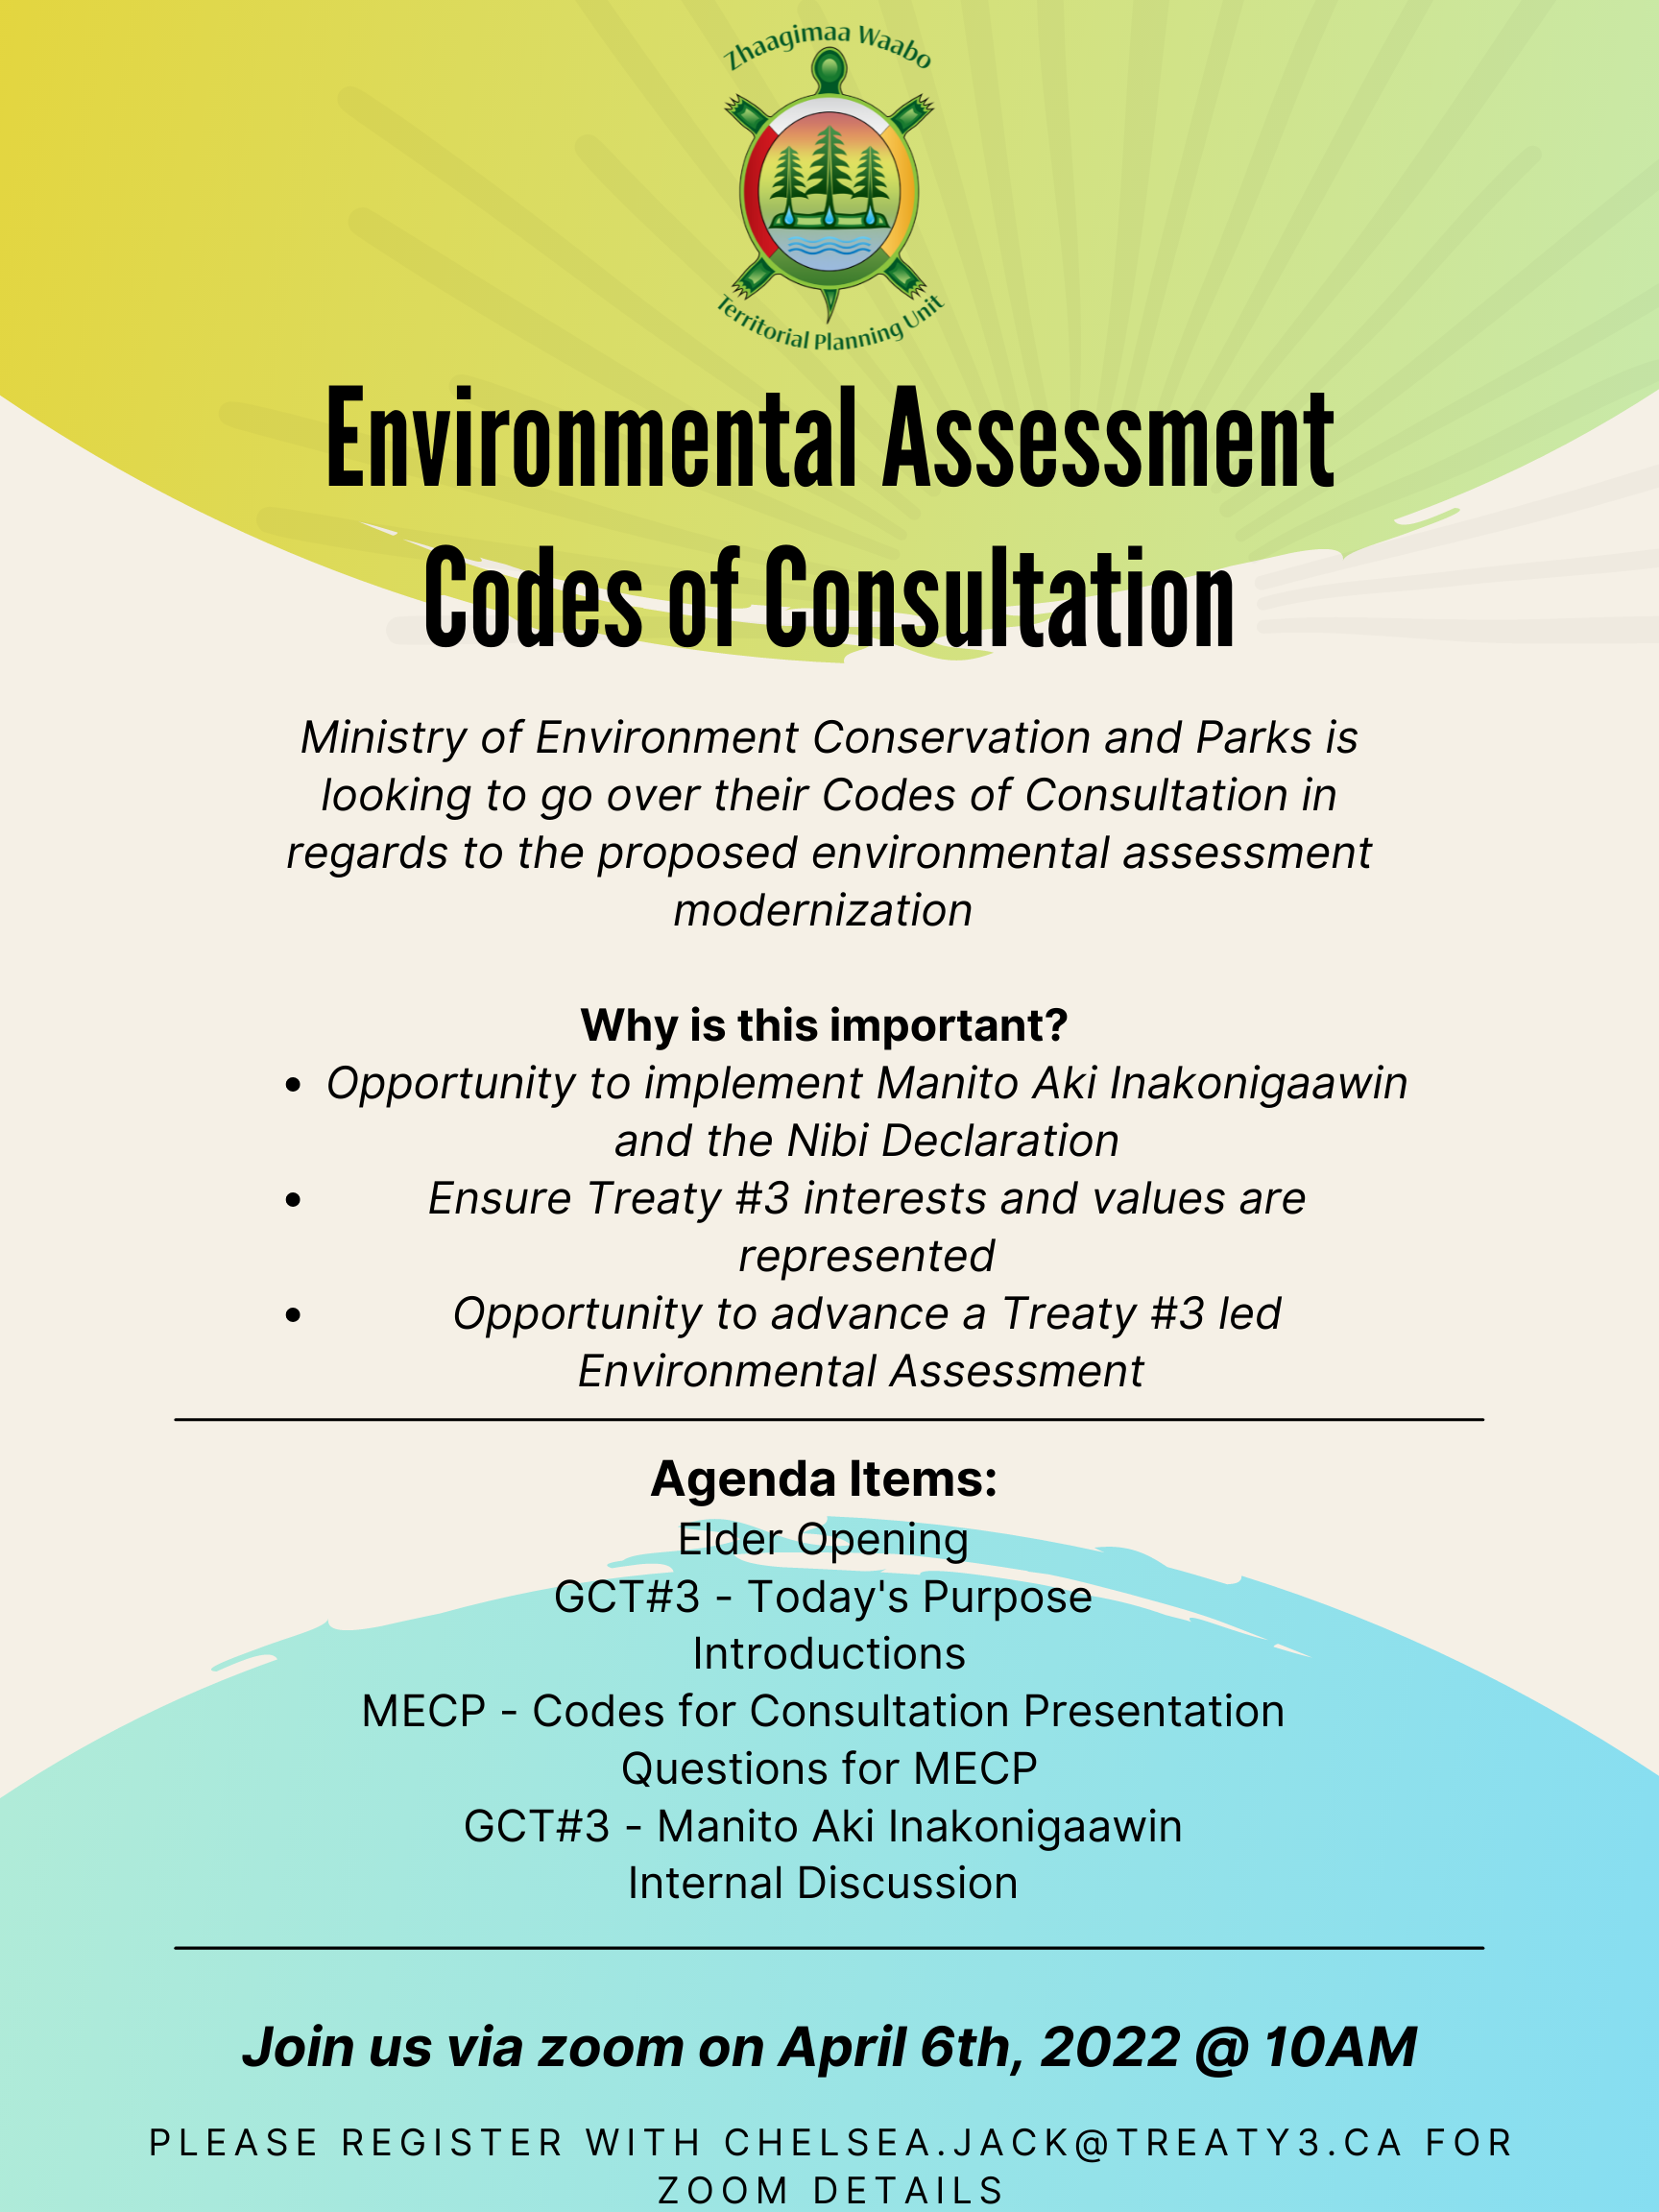 Environmental Assessment Codes of Consultation